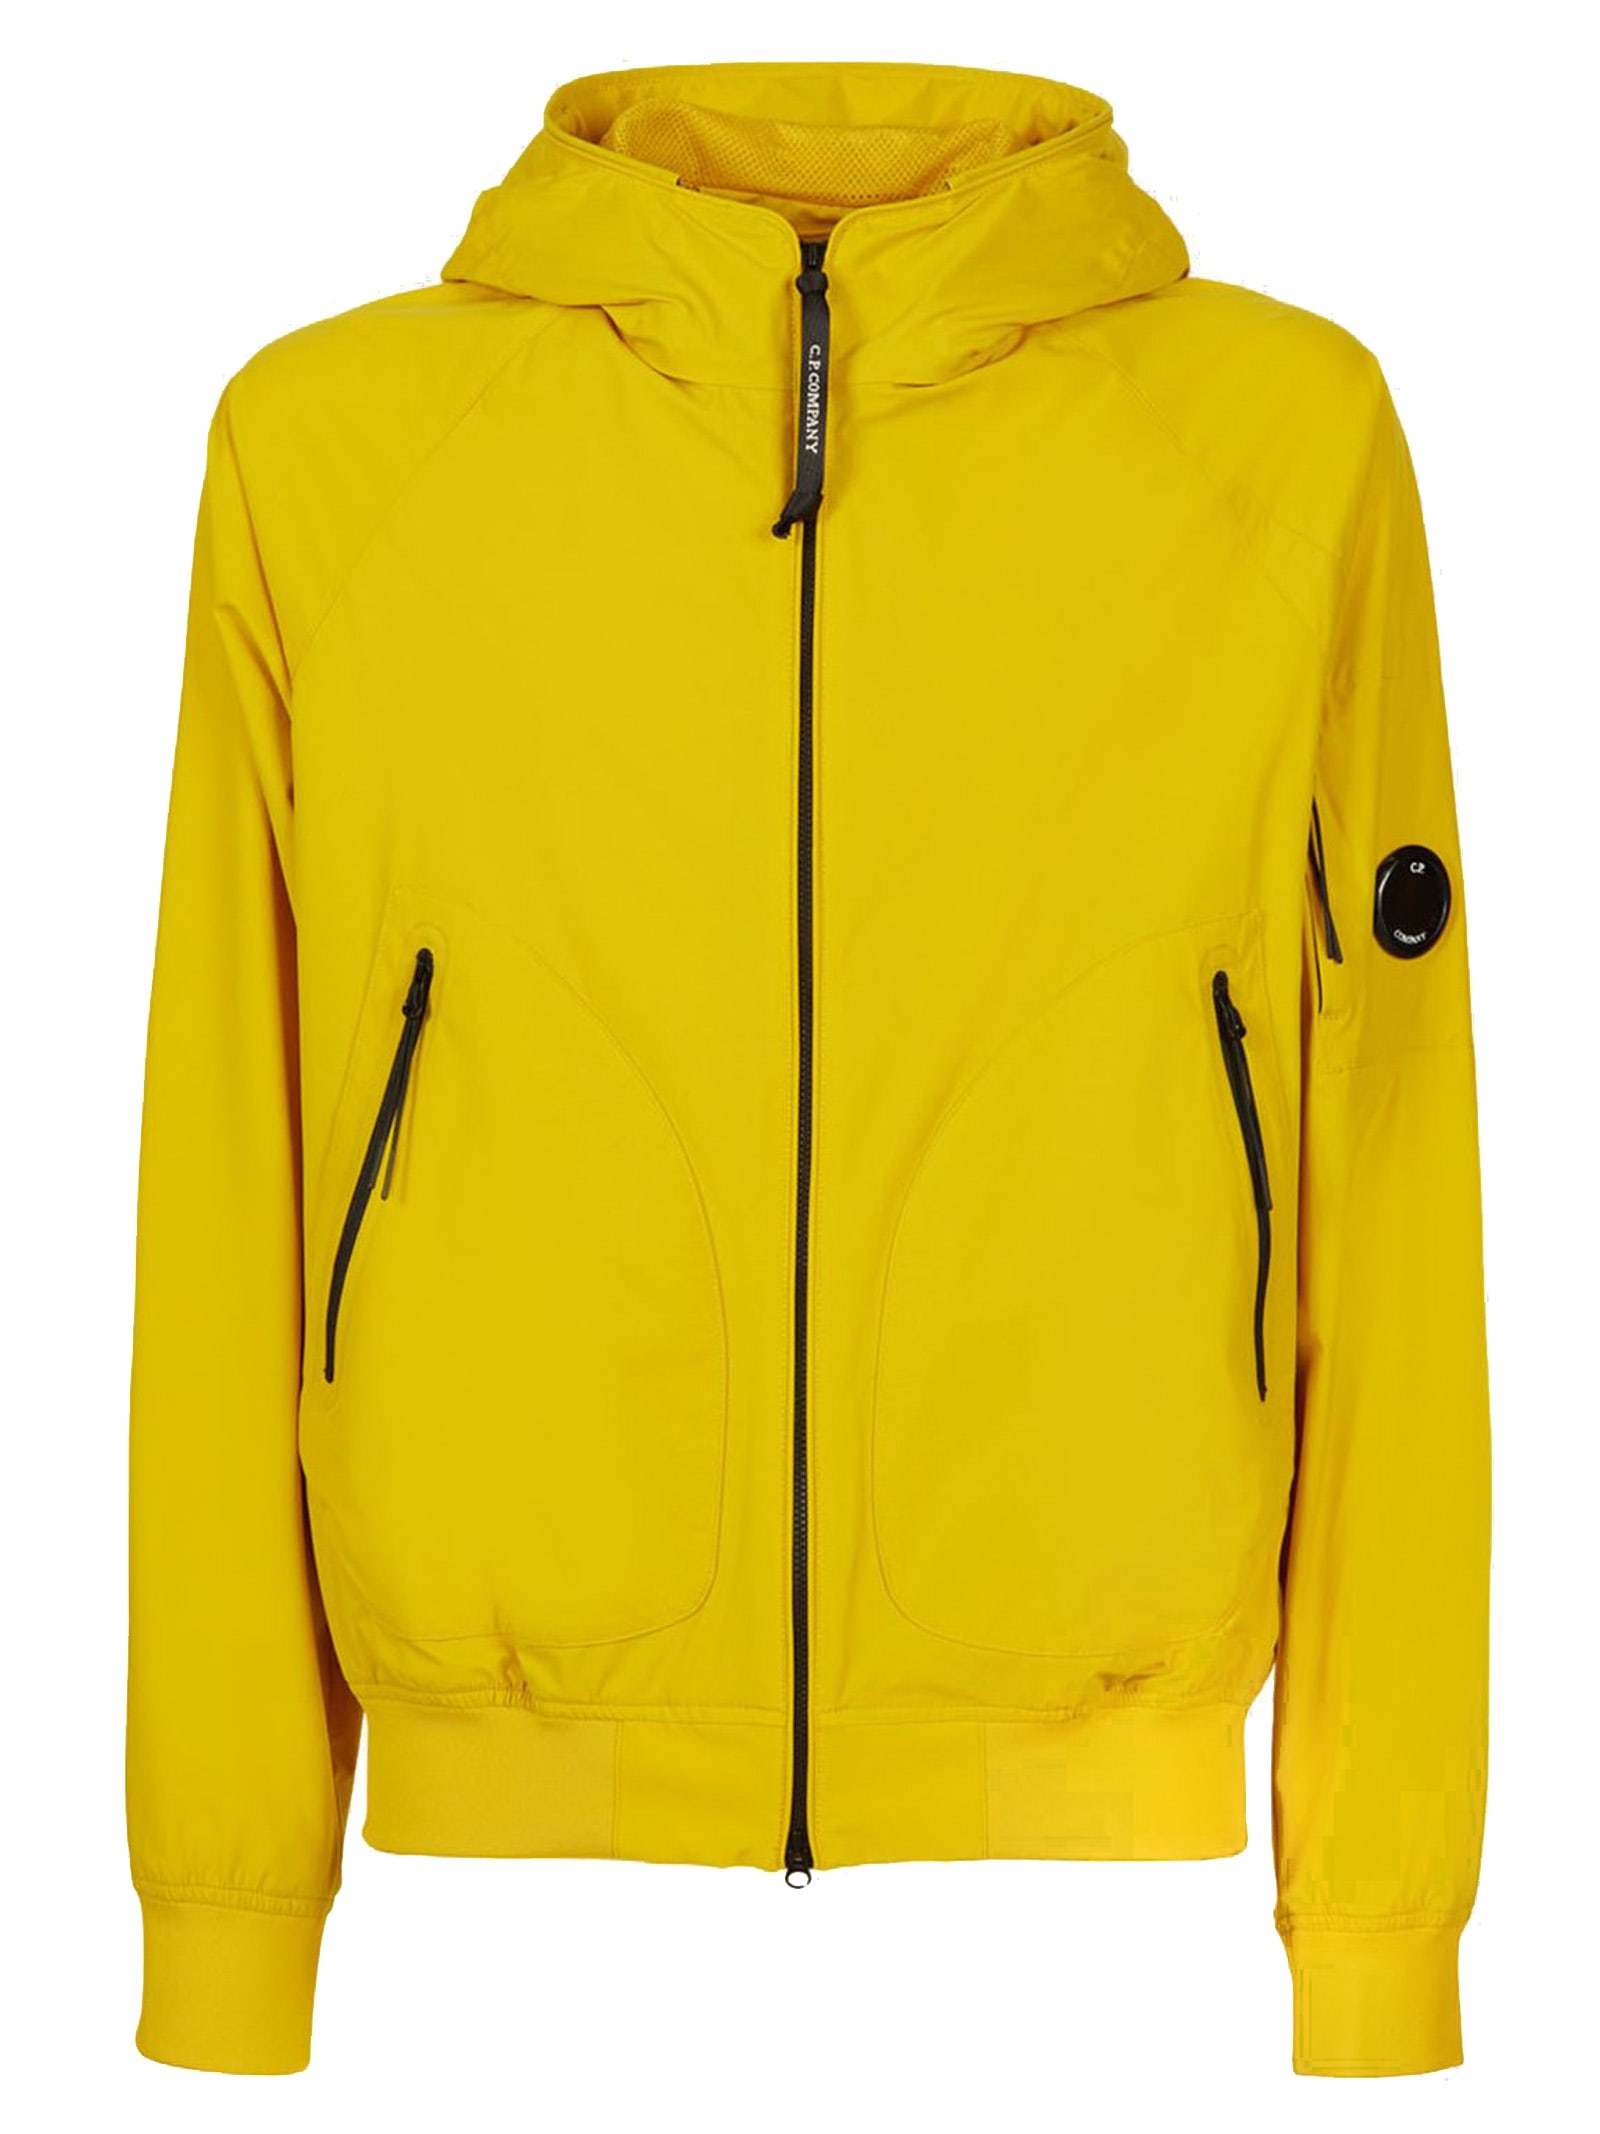 C.P. Company Yellow Pro-tek Mesh Jacket